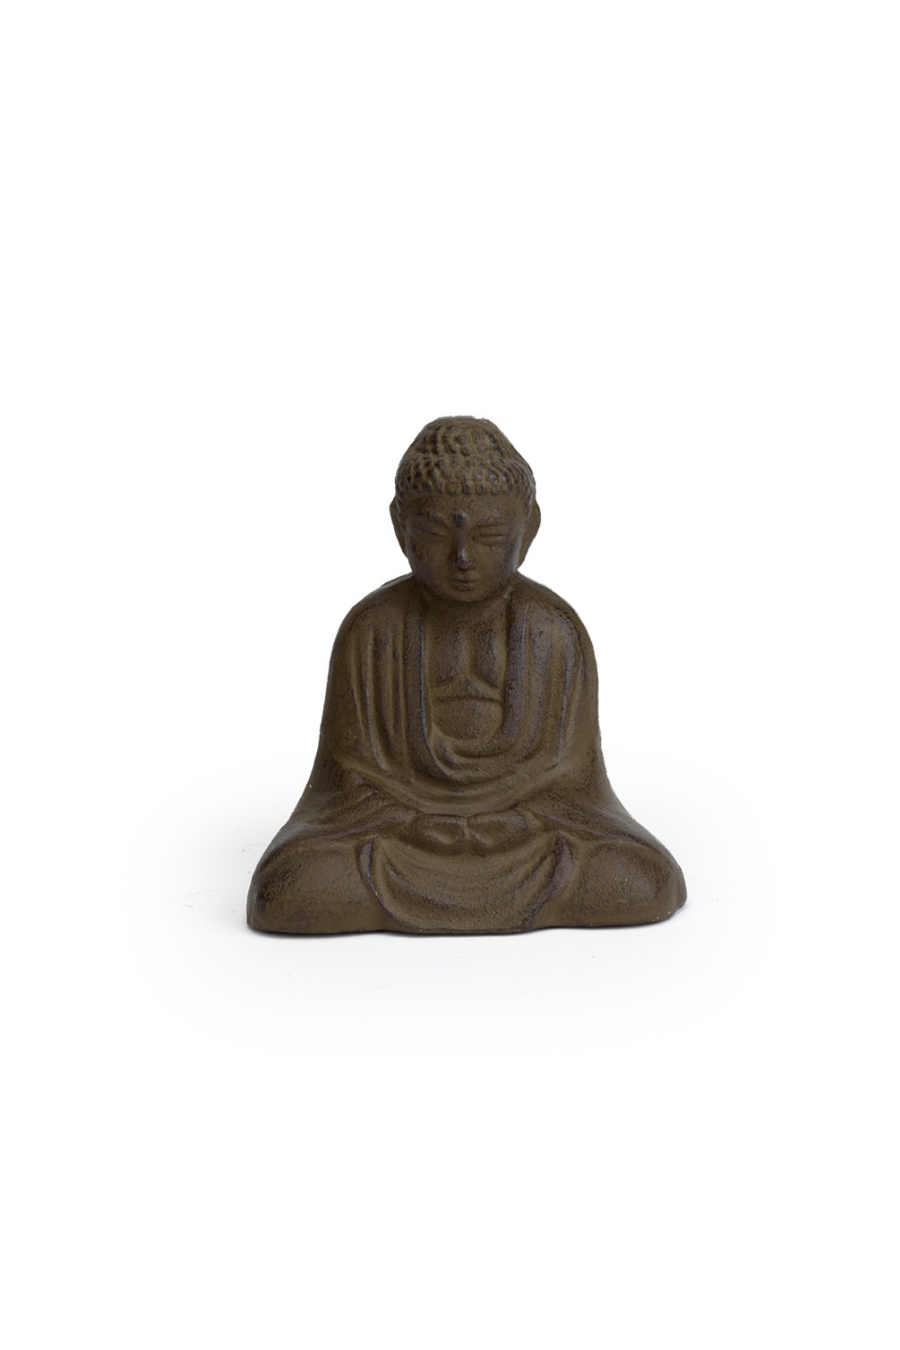 Sitting Cast Iron Buddha Figure